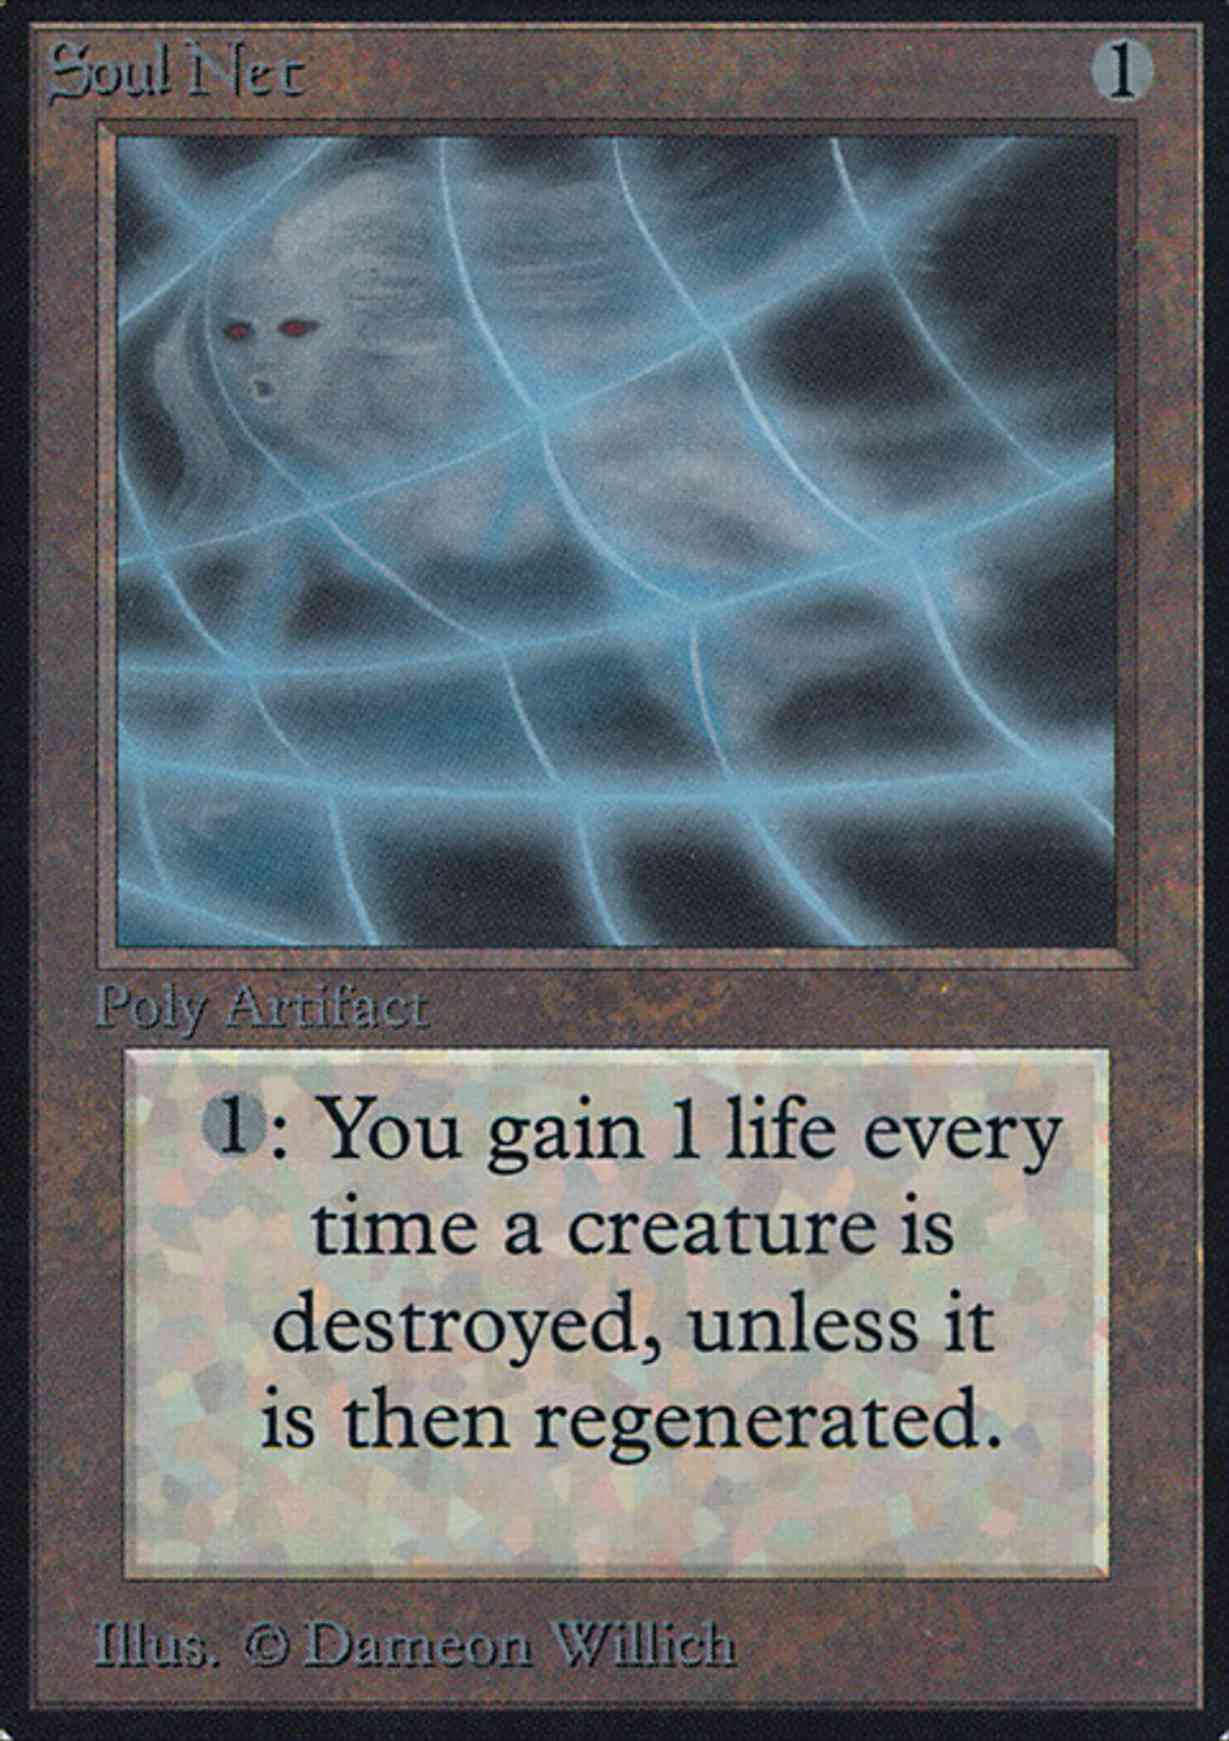 Soul Net magic card front